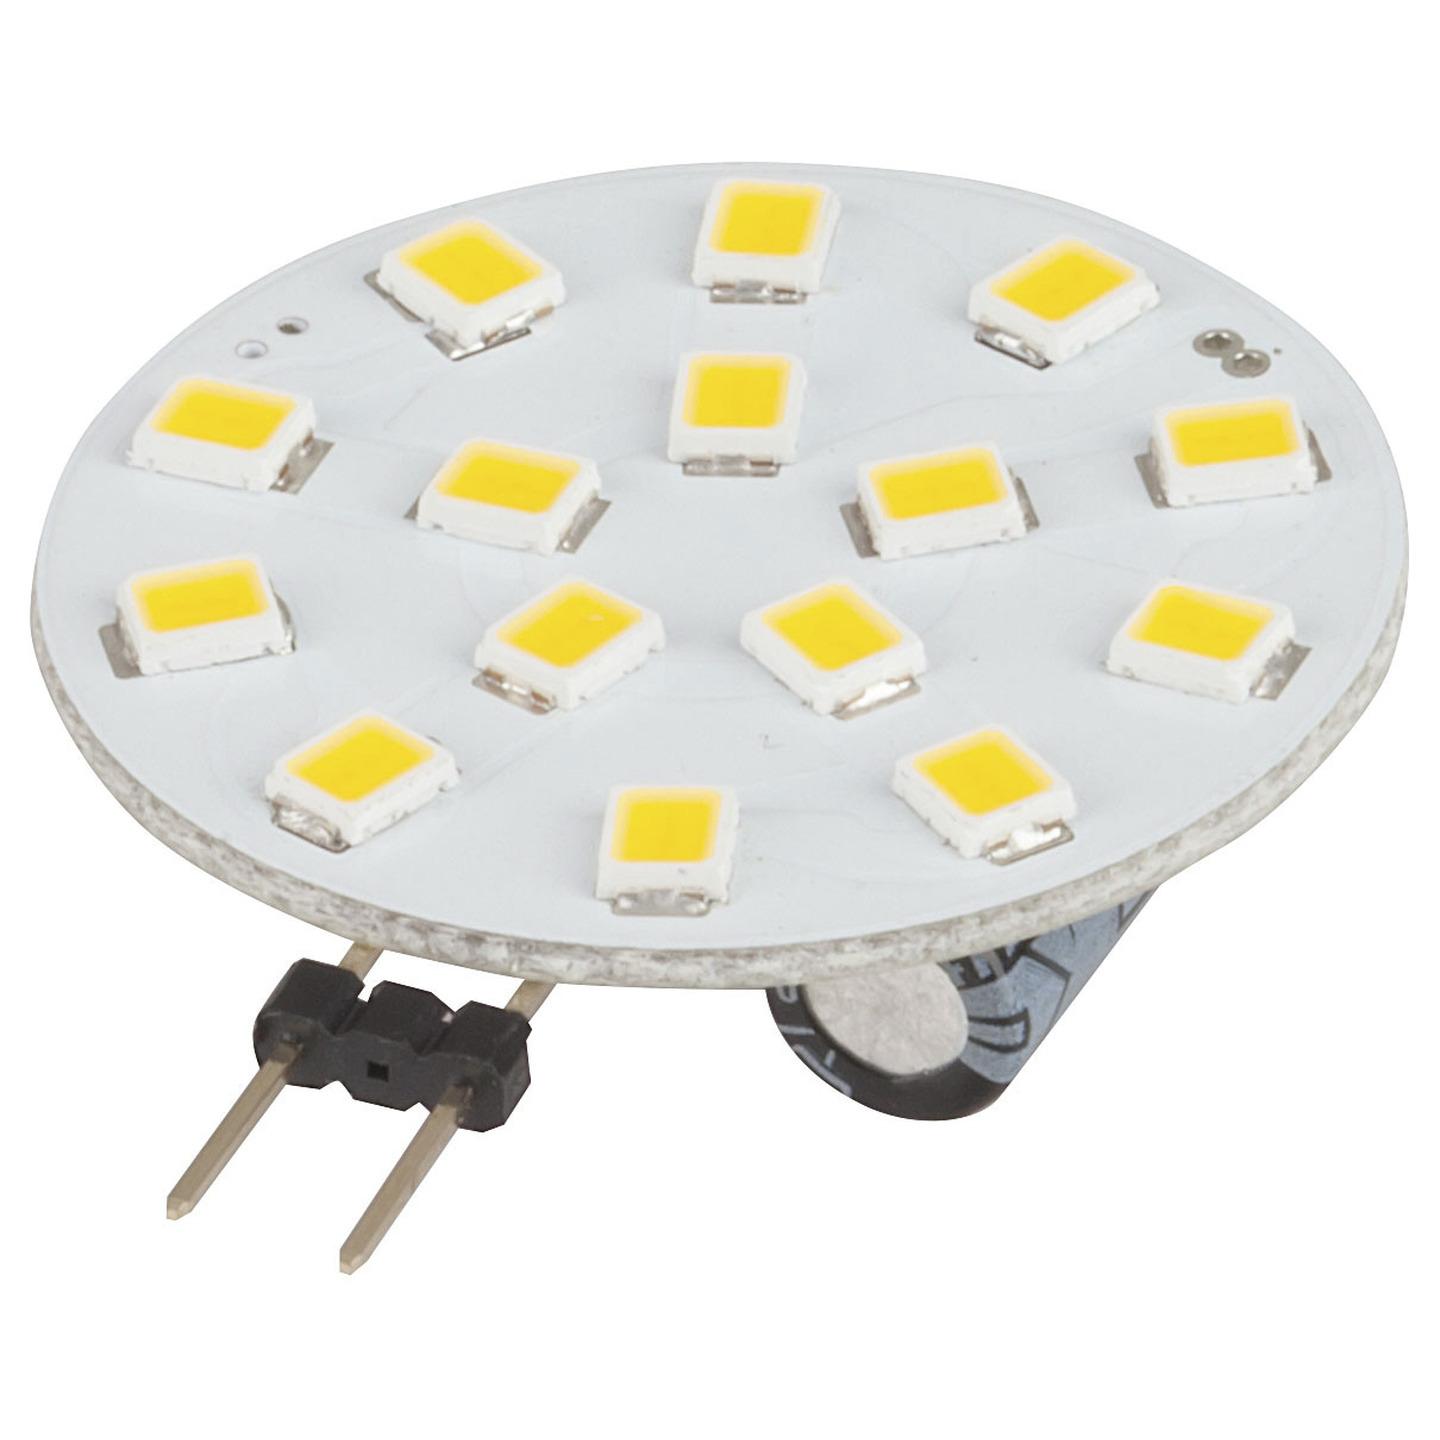 G4 LED Replacement Light15x2835 LEDs 120 12VAC/DC Warm White